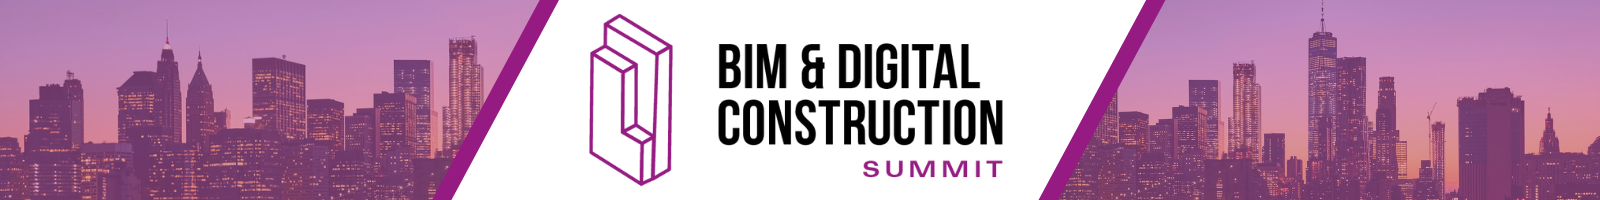 BIM & Digital Construction Summit Banner